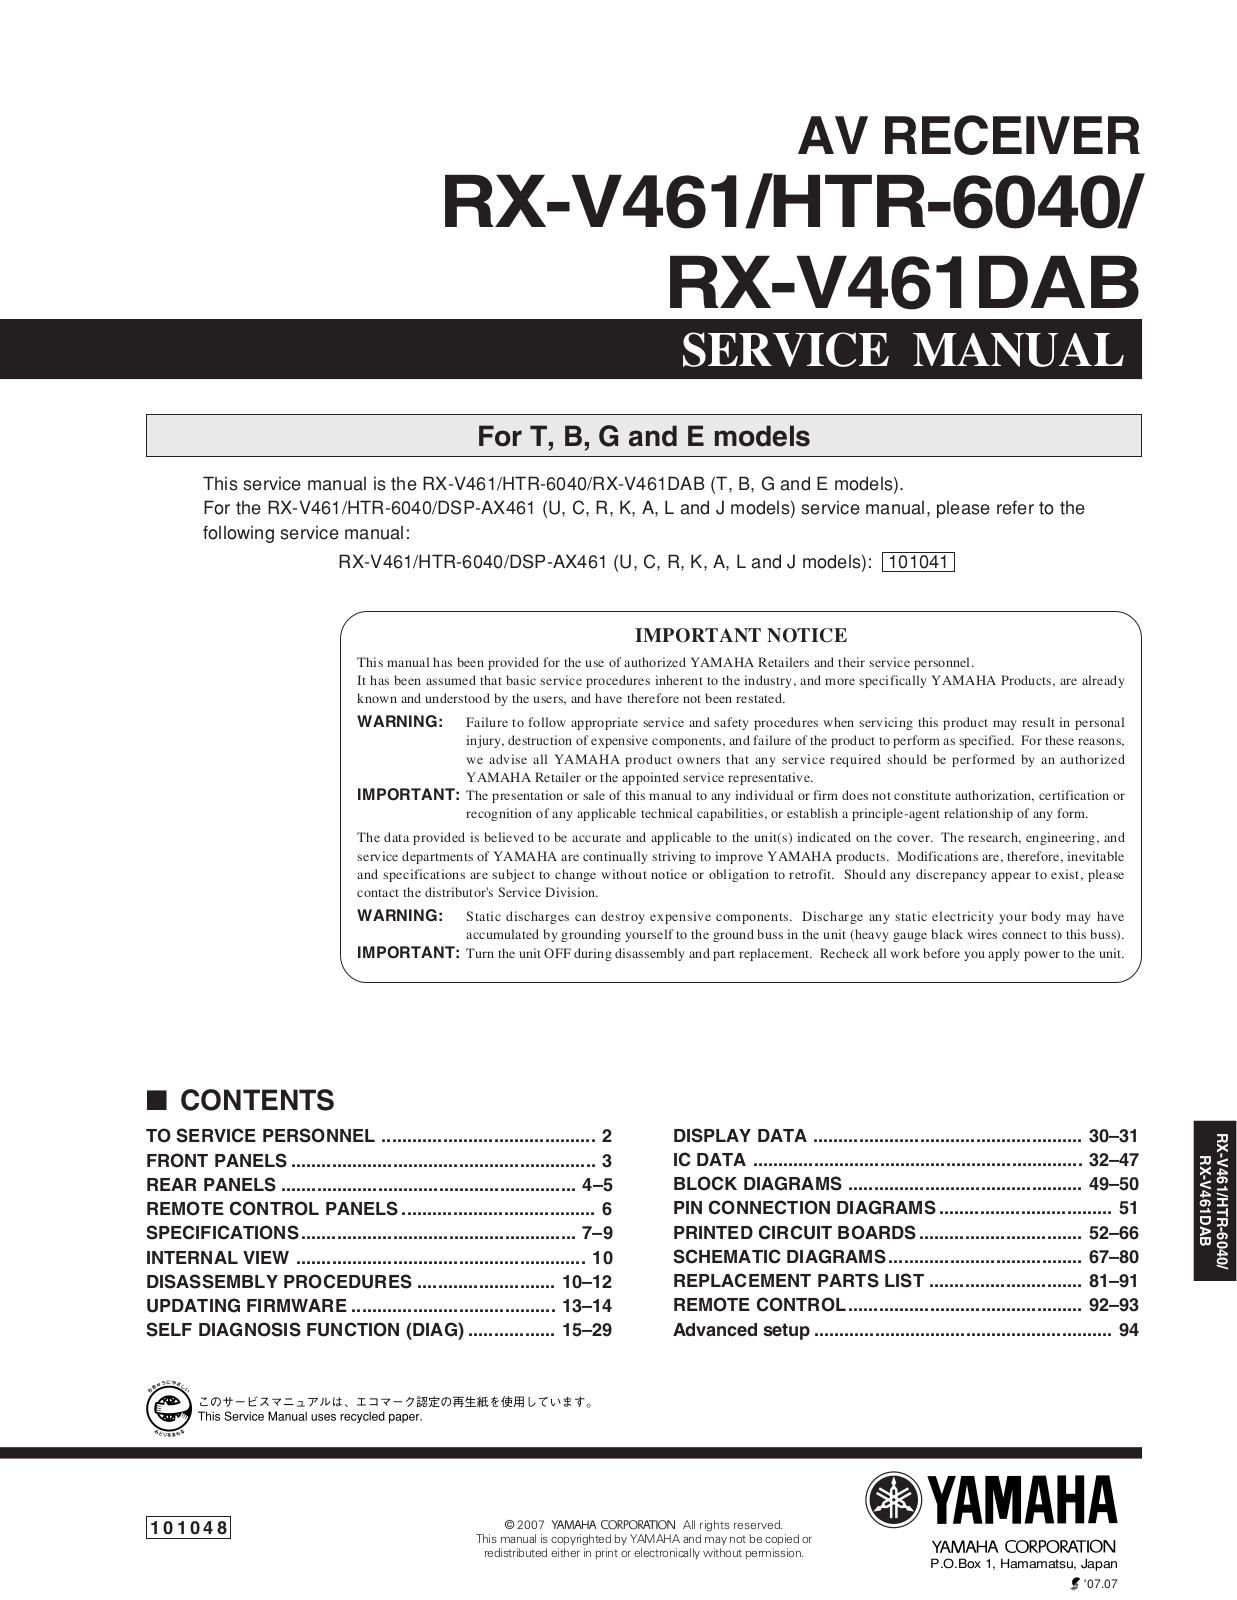 Yamaha RXV-461-DAB Service manual